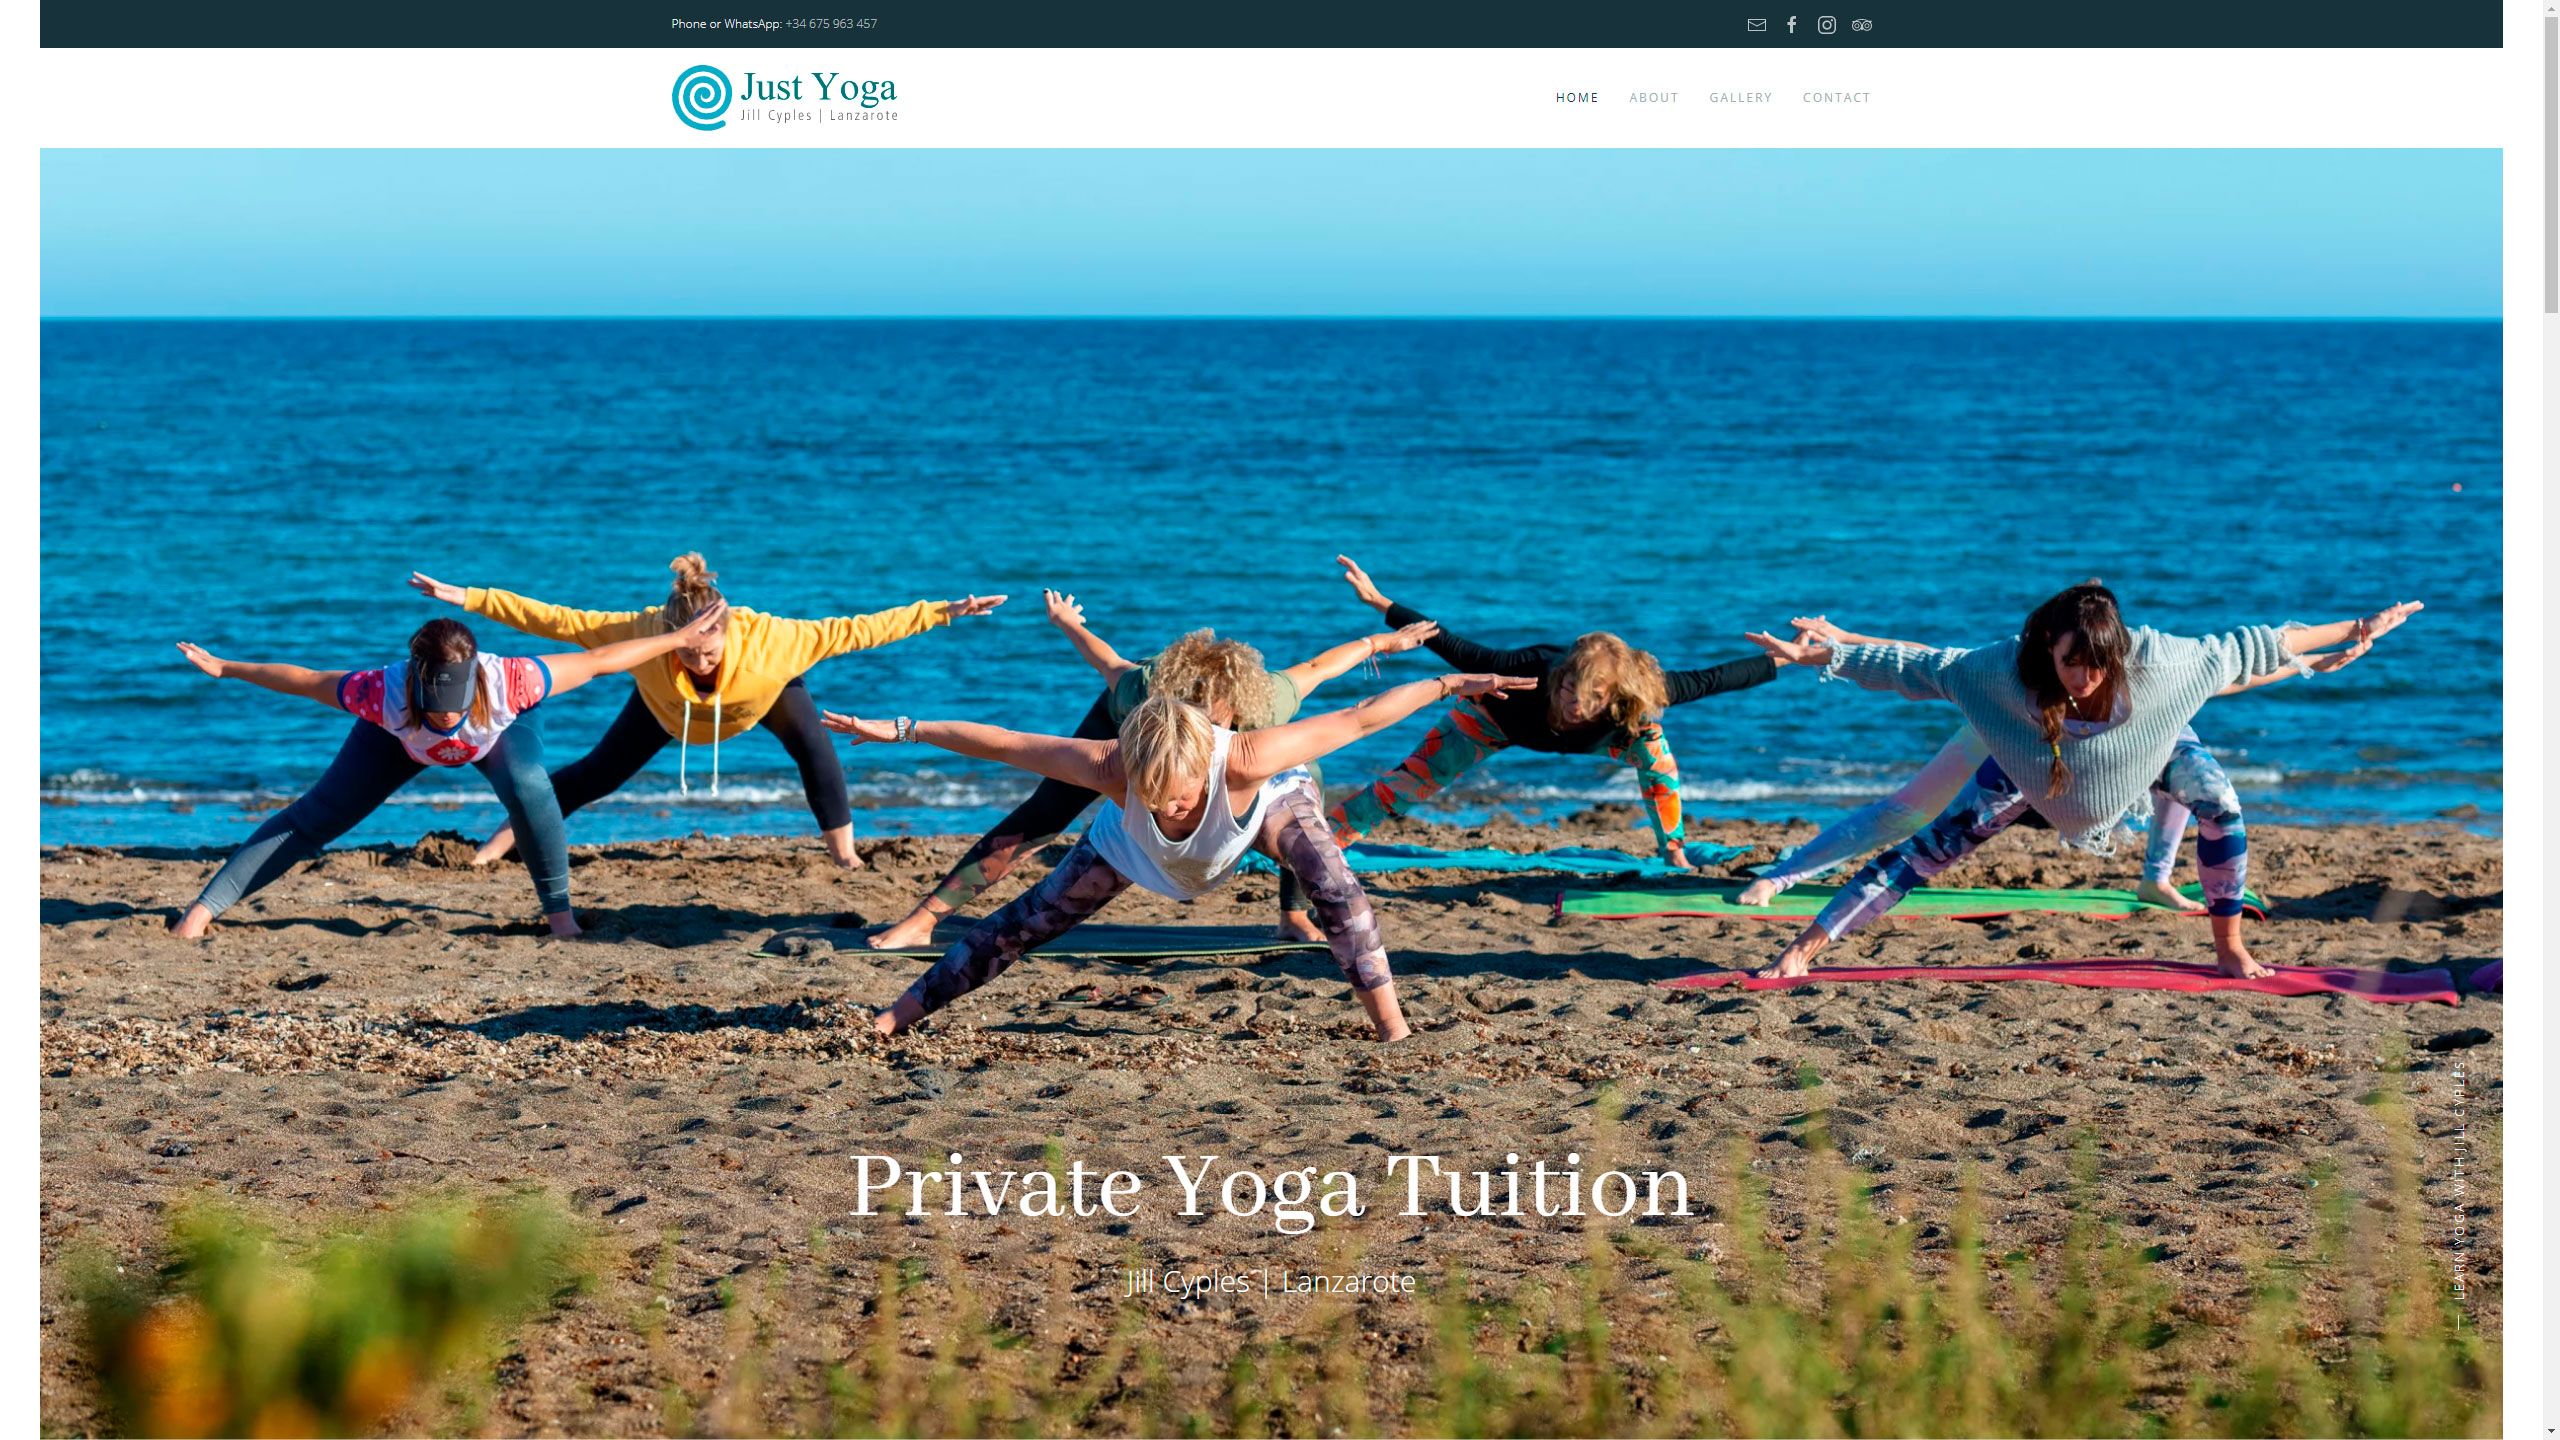 Jill Cyples Private Yoga Tuition